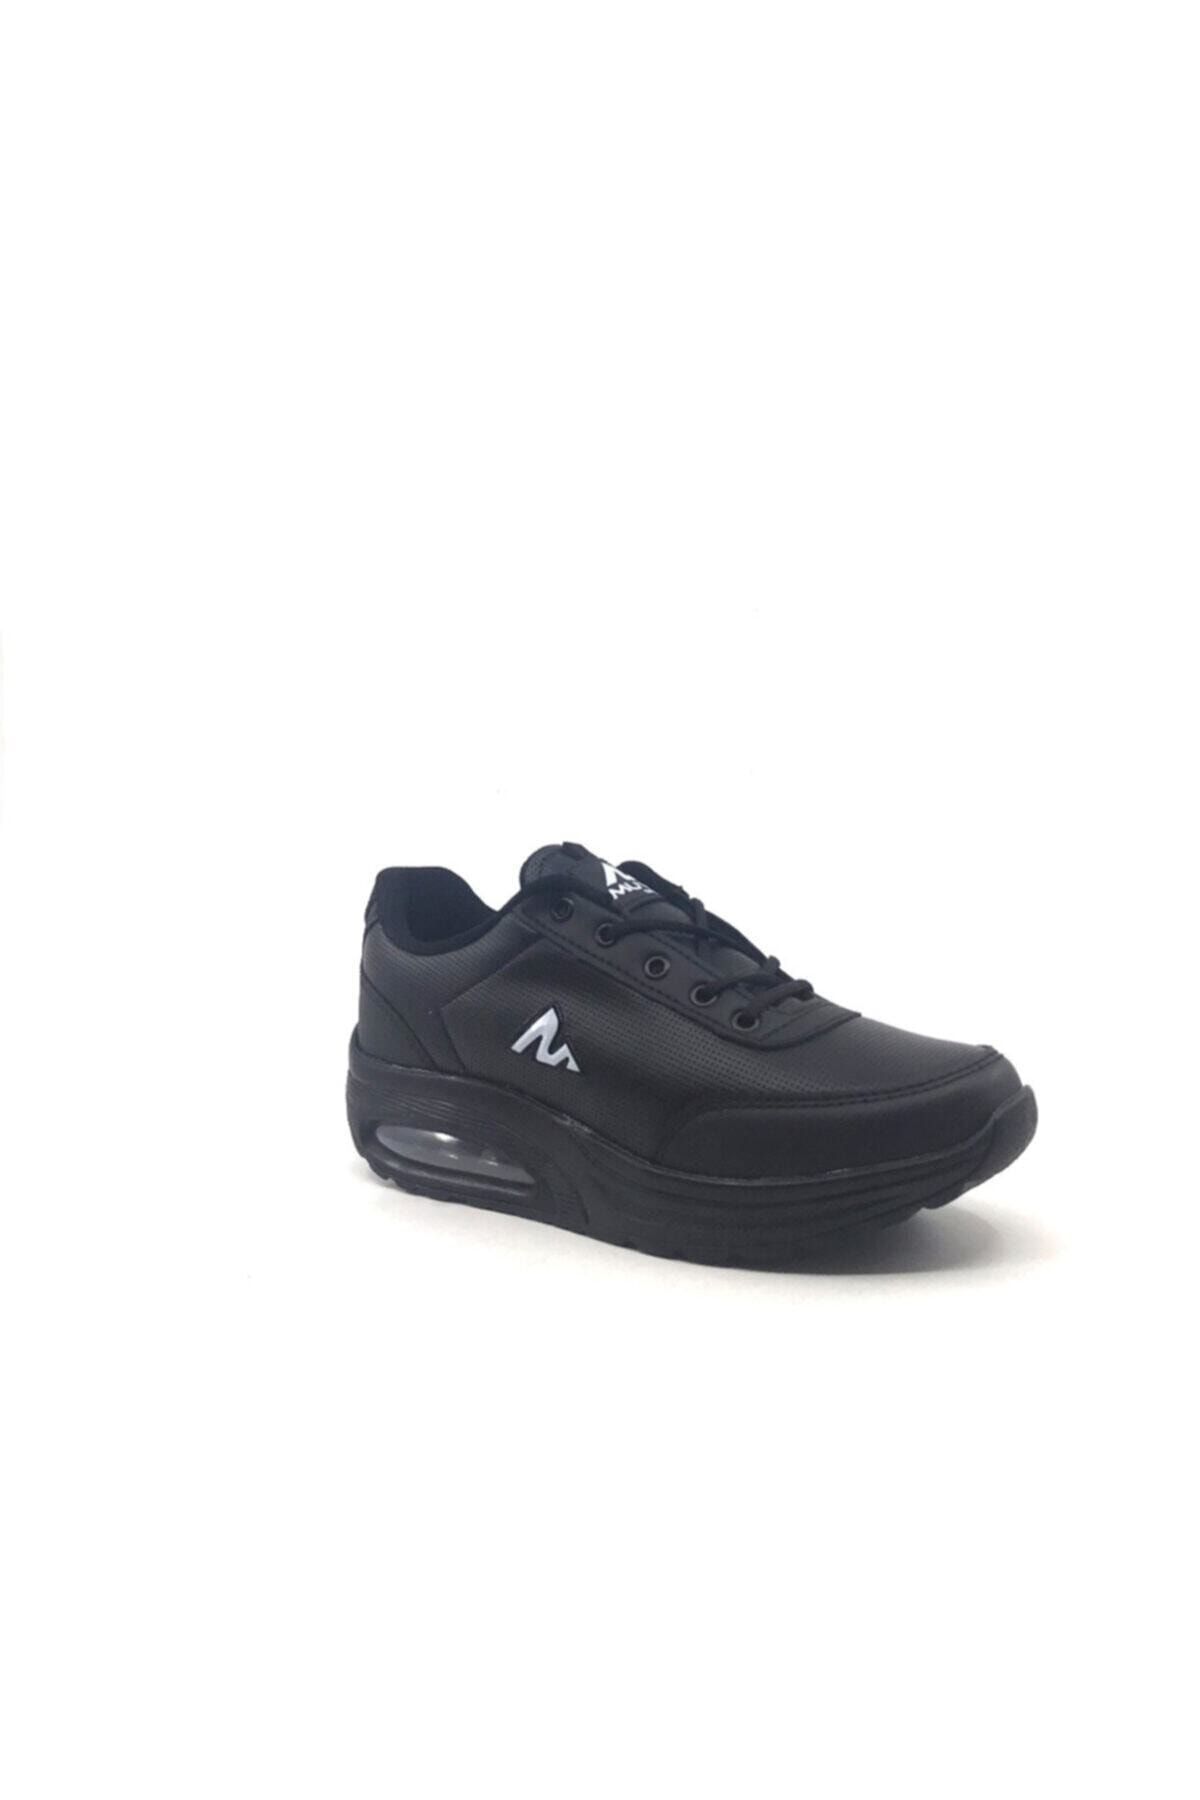 Muya 50557-3383 Siyah Air Max Taban Bayan Günlük Spor Ayakkabı